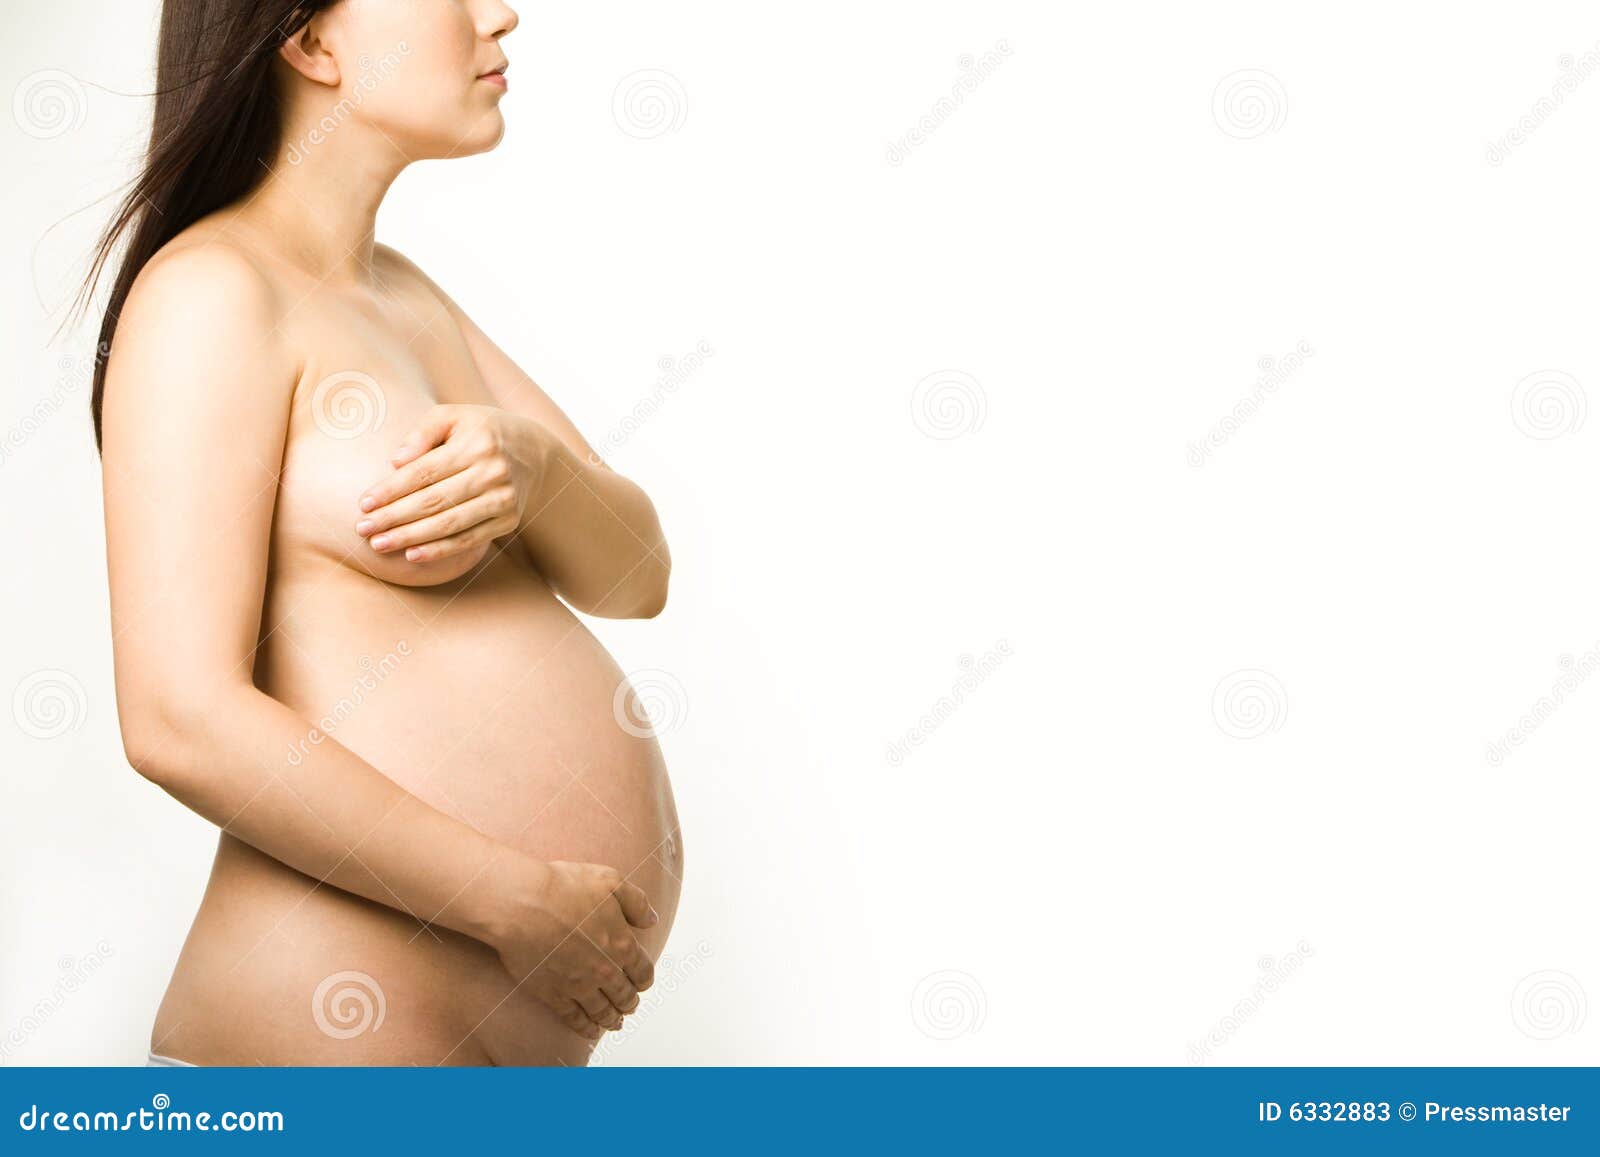 беременна из груди бежит фото 111